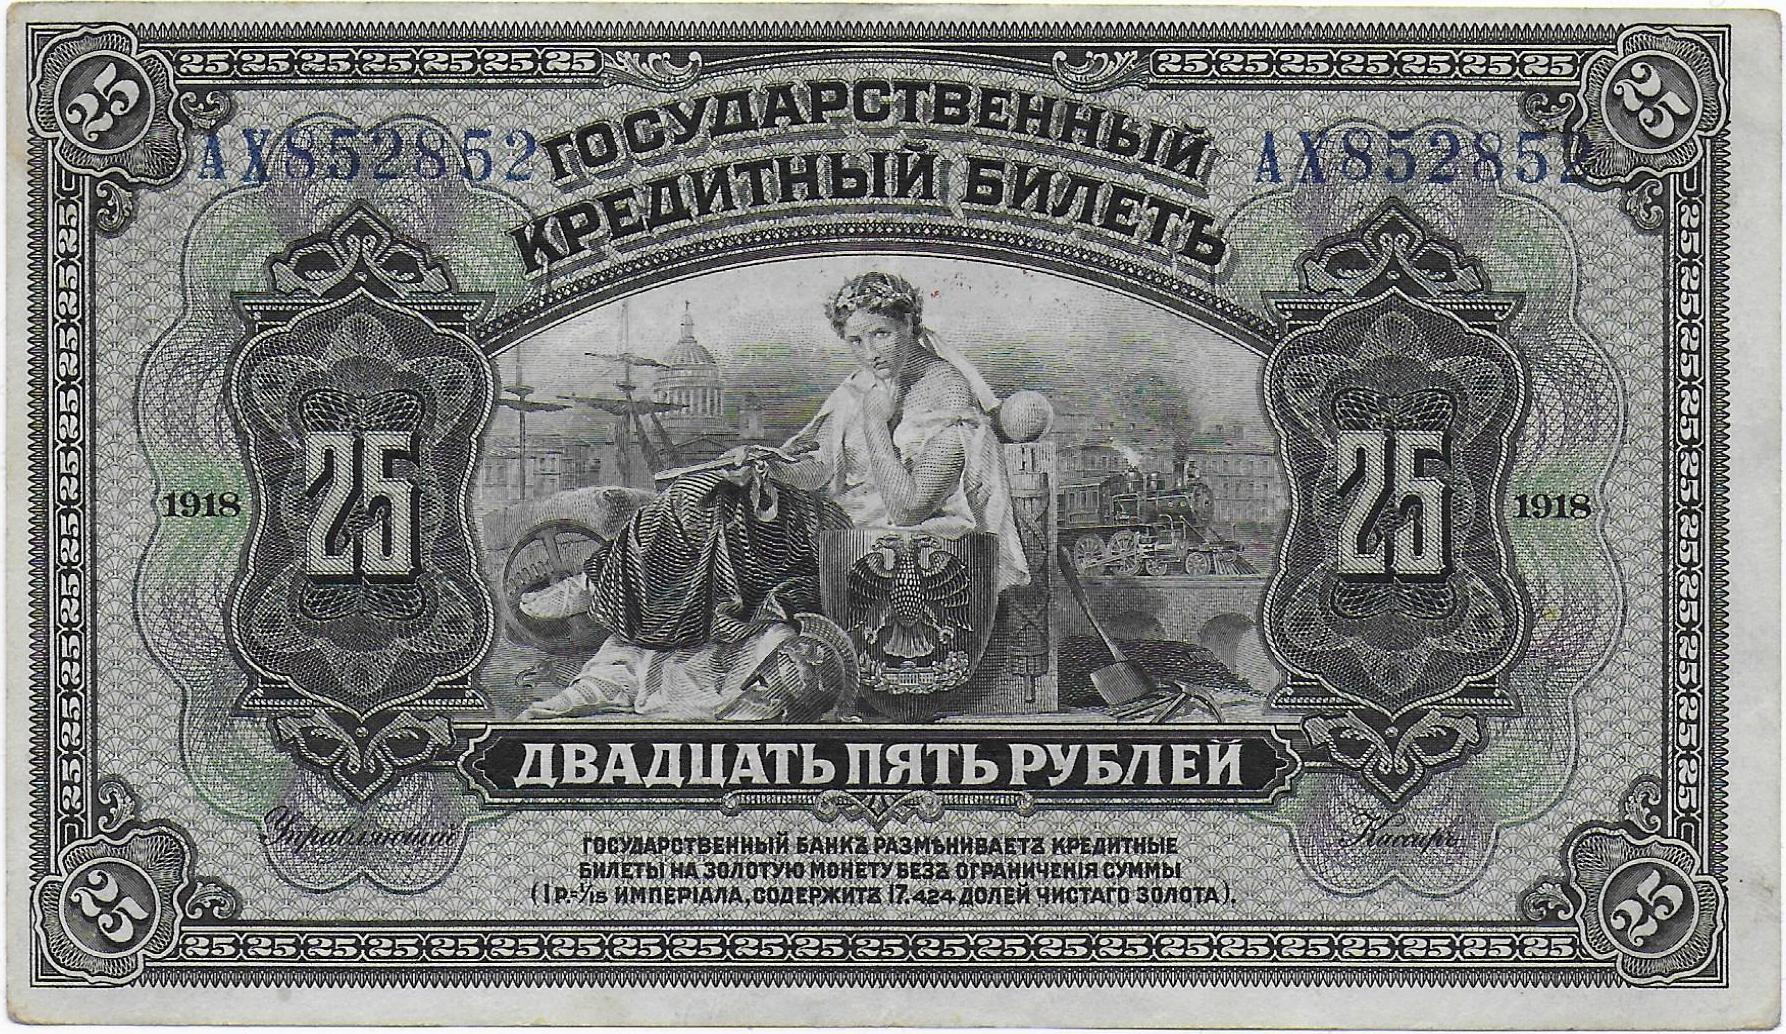 Russia- Pribaikal Region 25 Rubles Banknote 1918 front.jpg